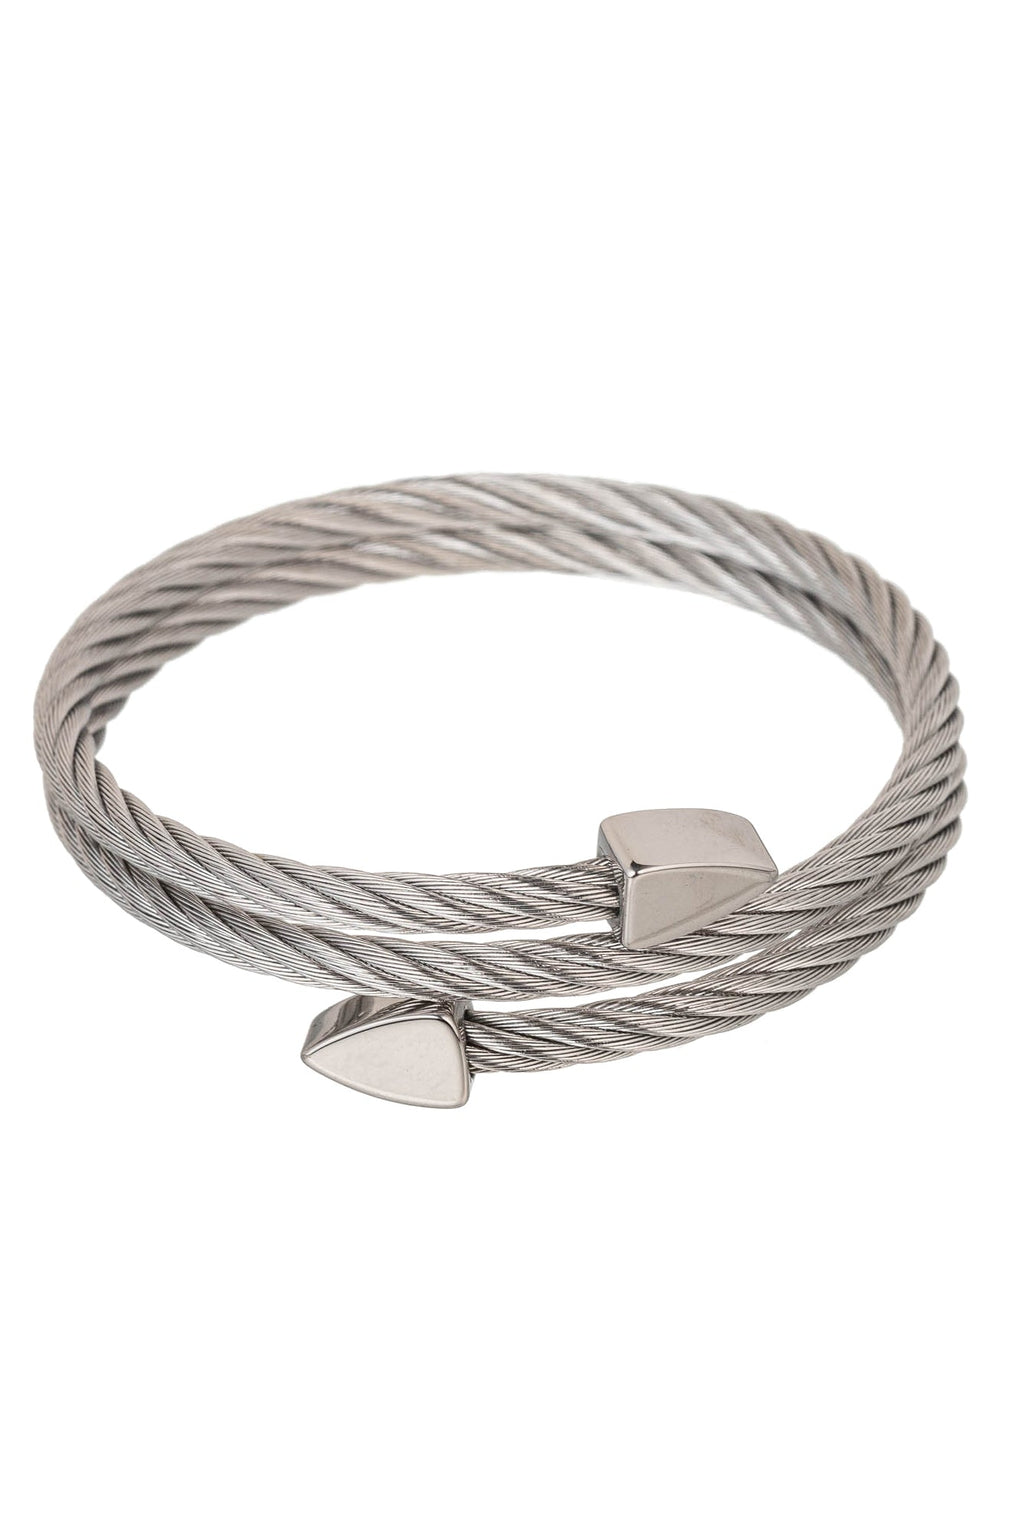 Logan Gold and Silver-Tone Arrow Wire Bracelet: Embrace Bold Elegance